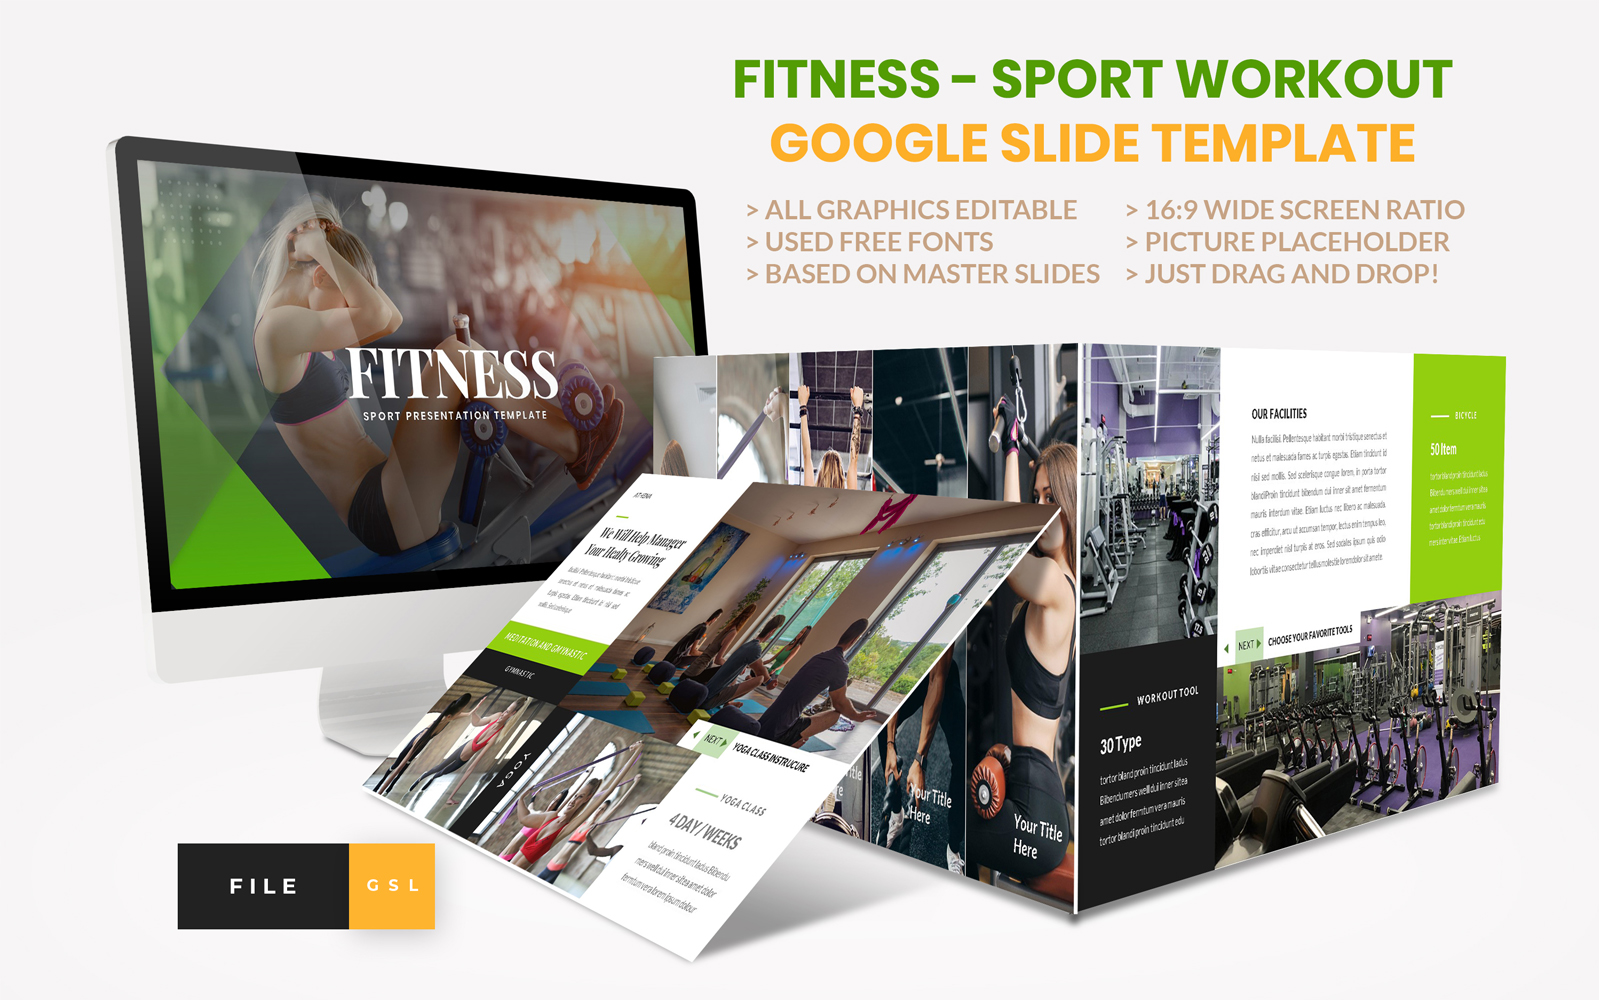 Sport - Fitness Business Workout Google Slides